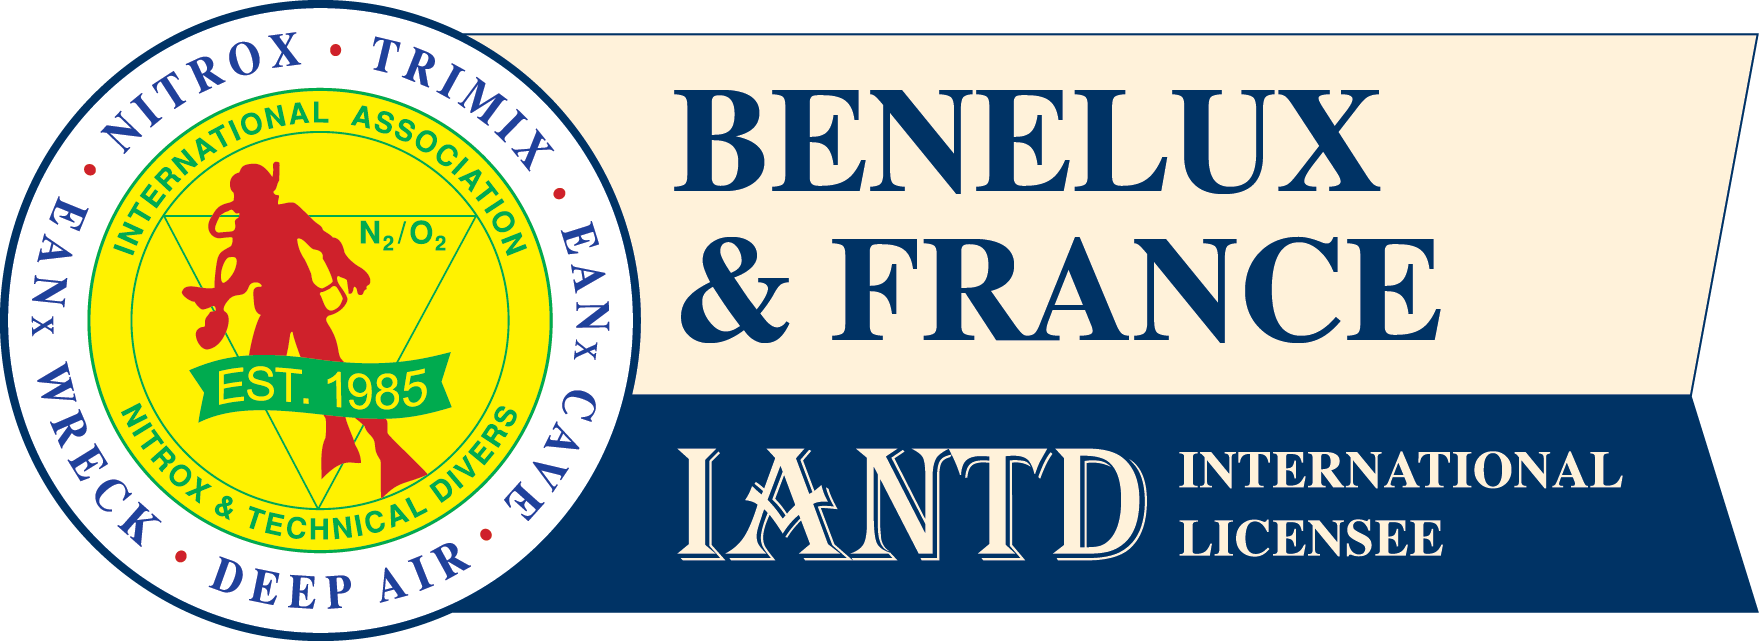 IANTD Benelux & France